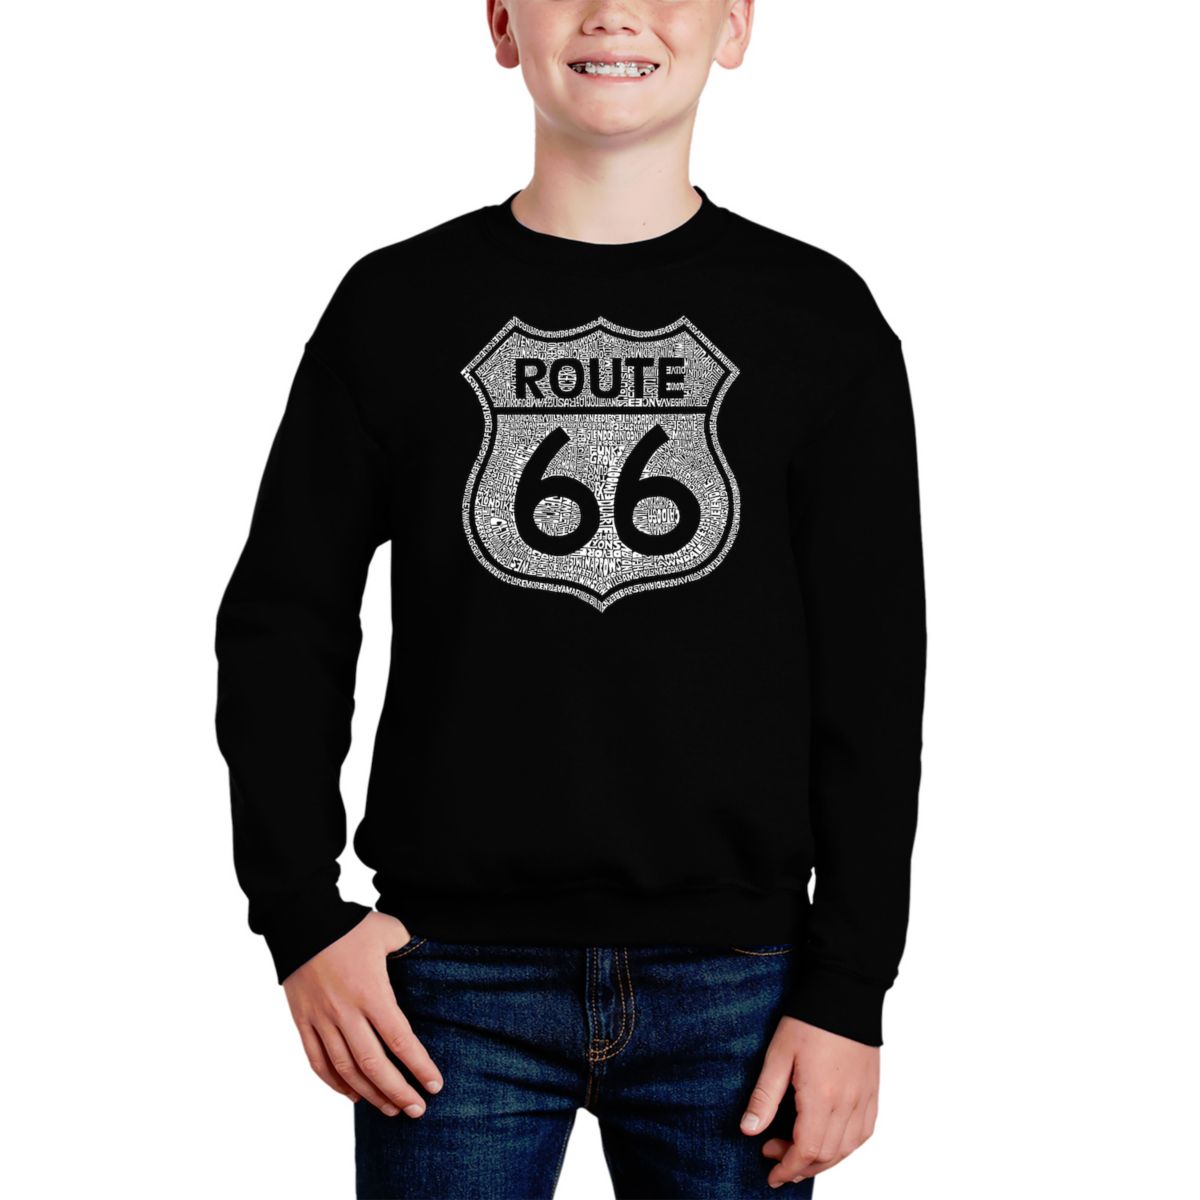 Cities Along The Legendary Route 66 - Boy's Word Art Crewneck Sweatshirt LA Pop Art